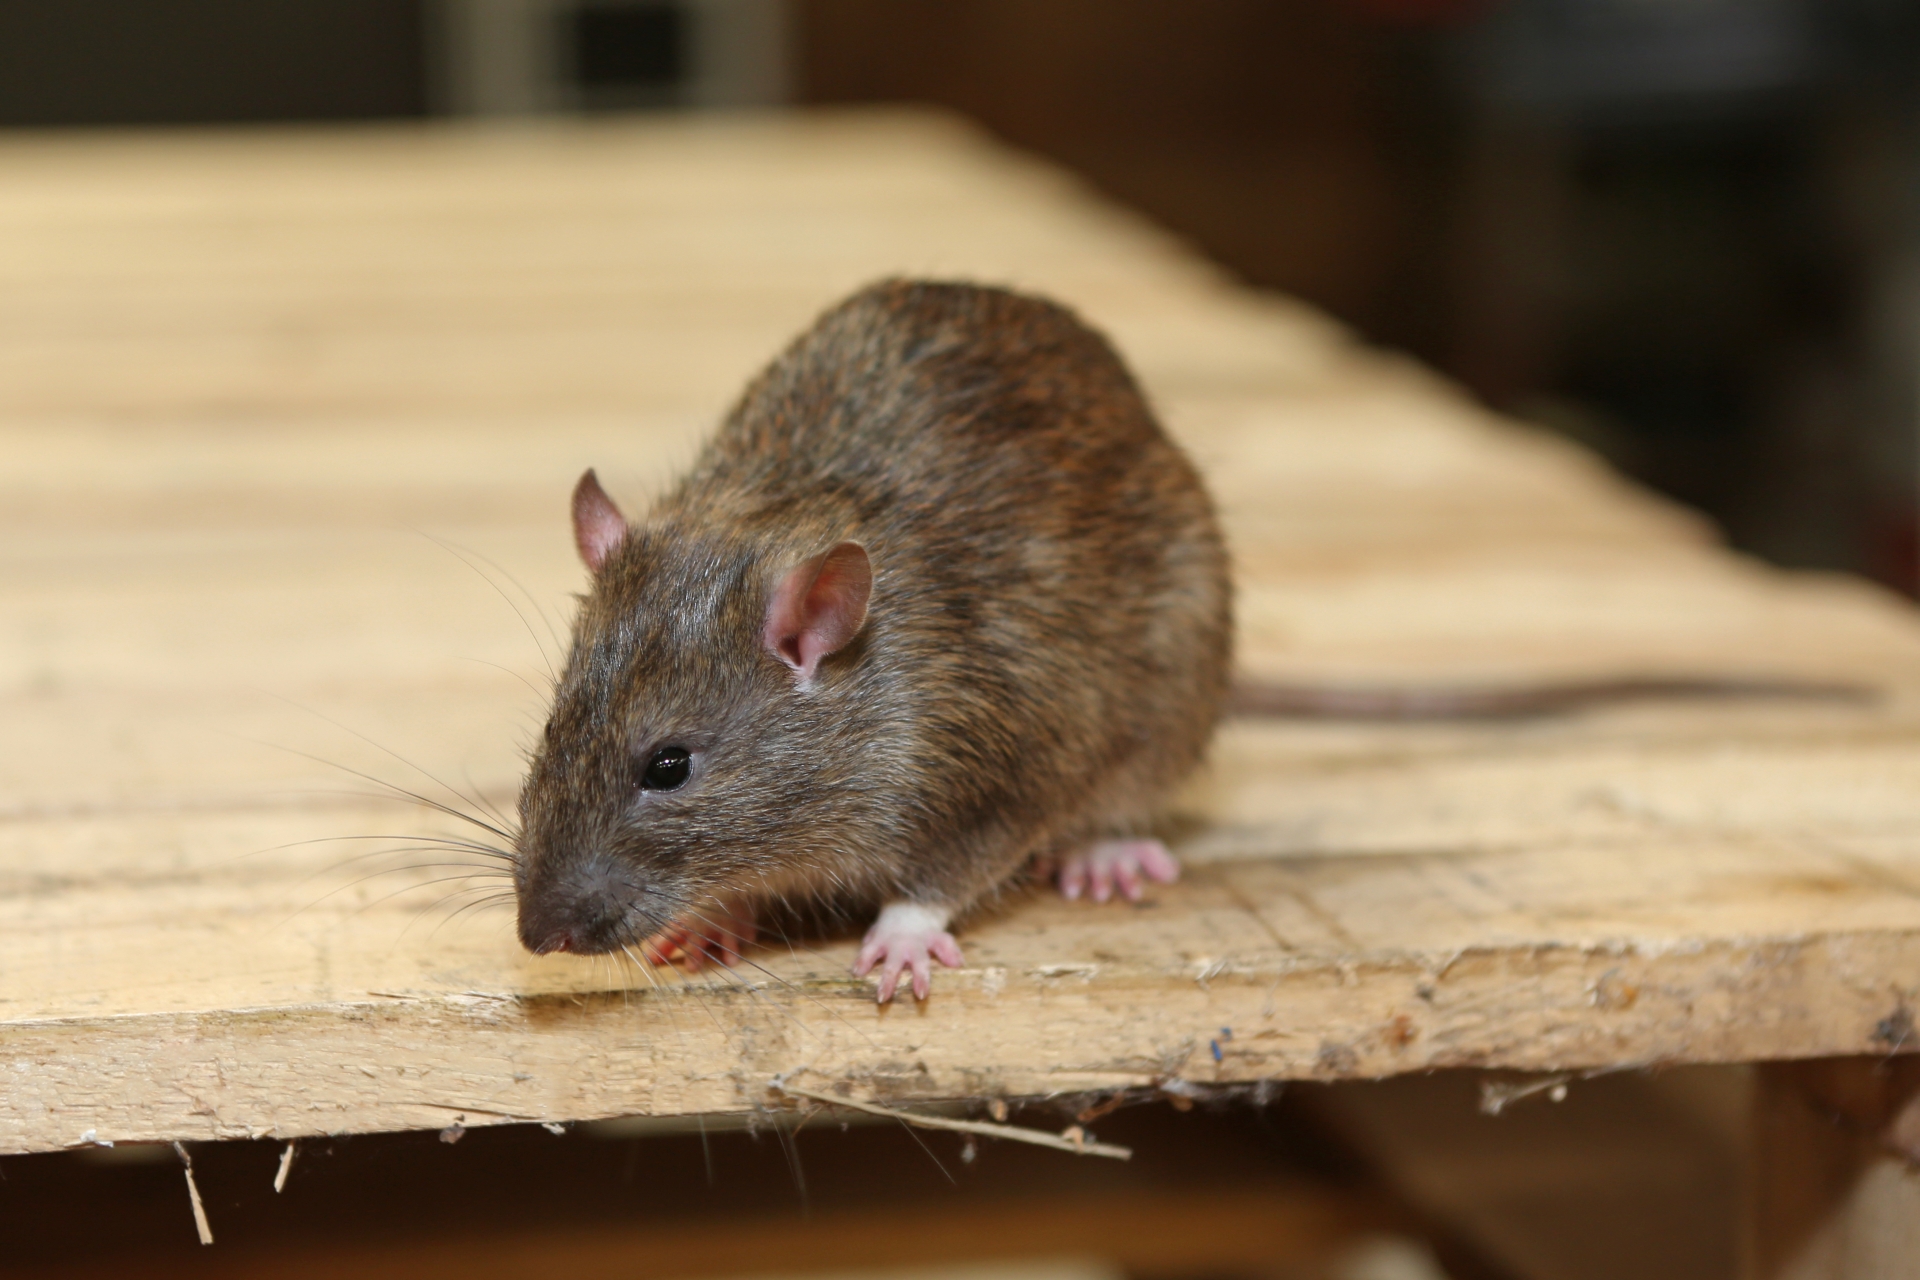 Rat extermination, Pest Control in Redbridge, IG4. Call Now 020 8166 9746